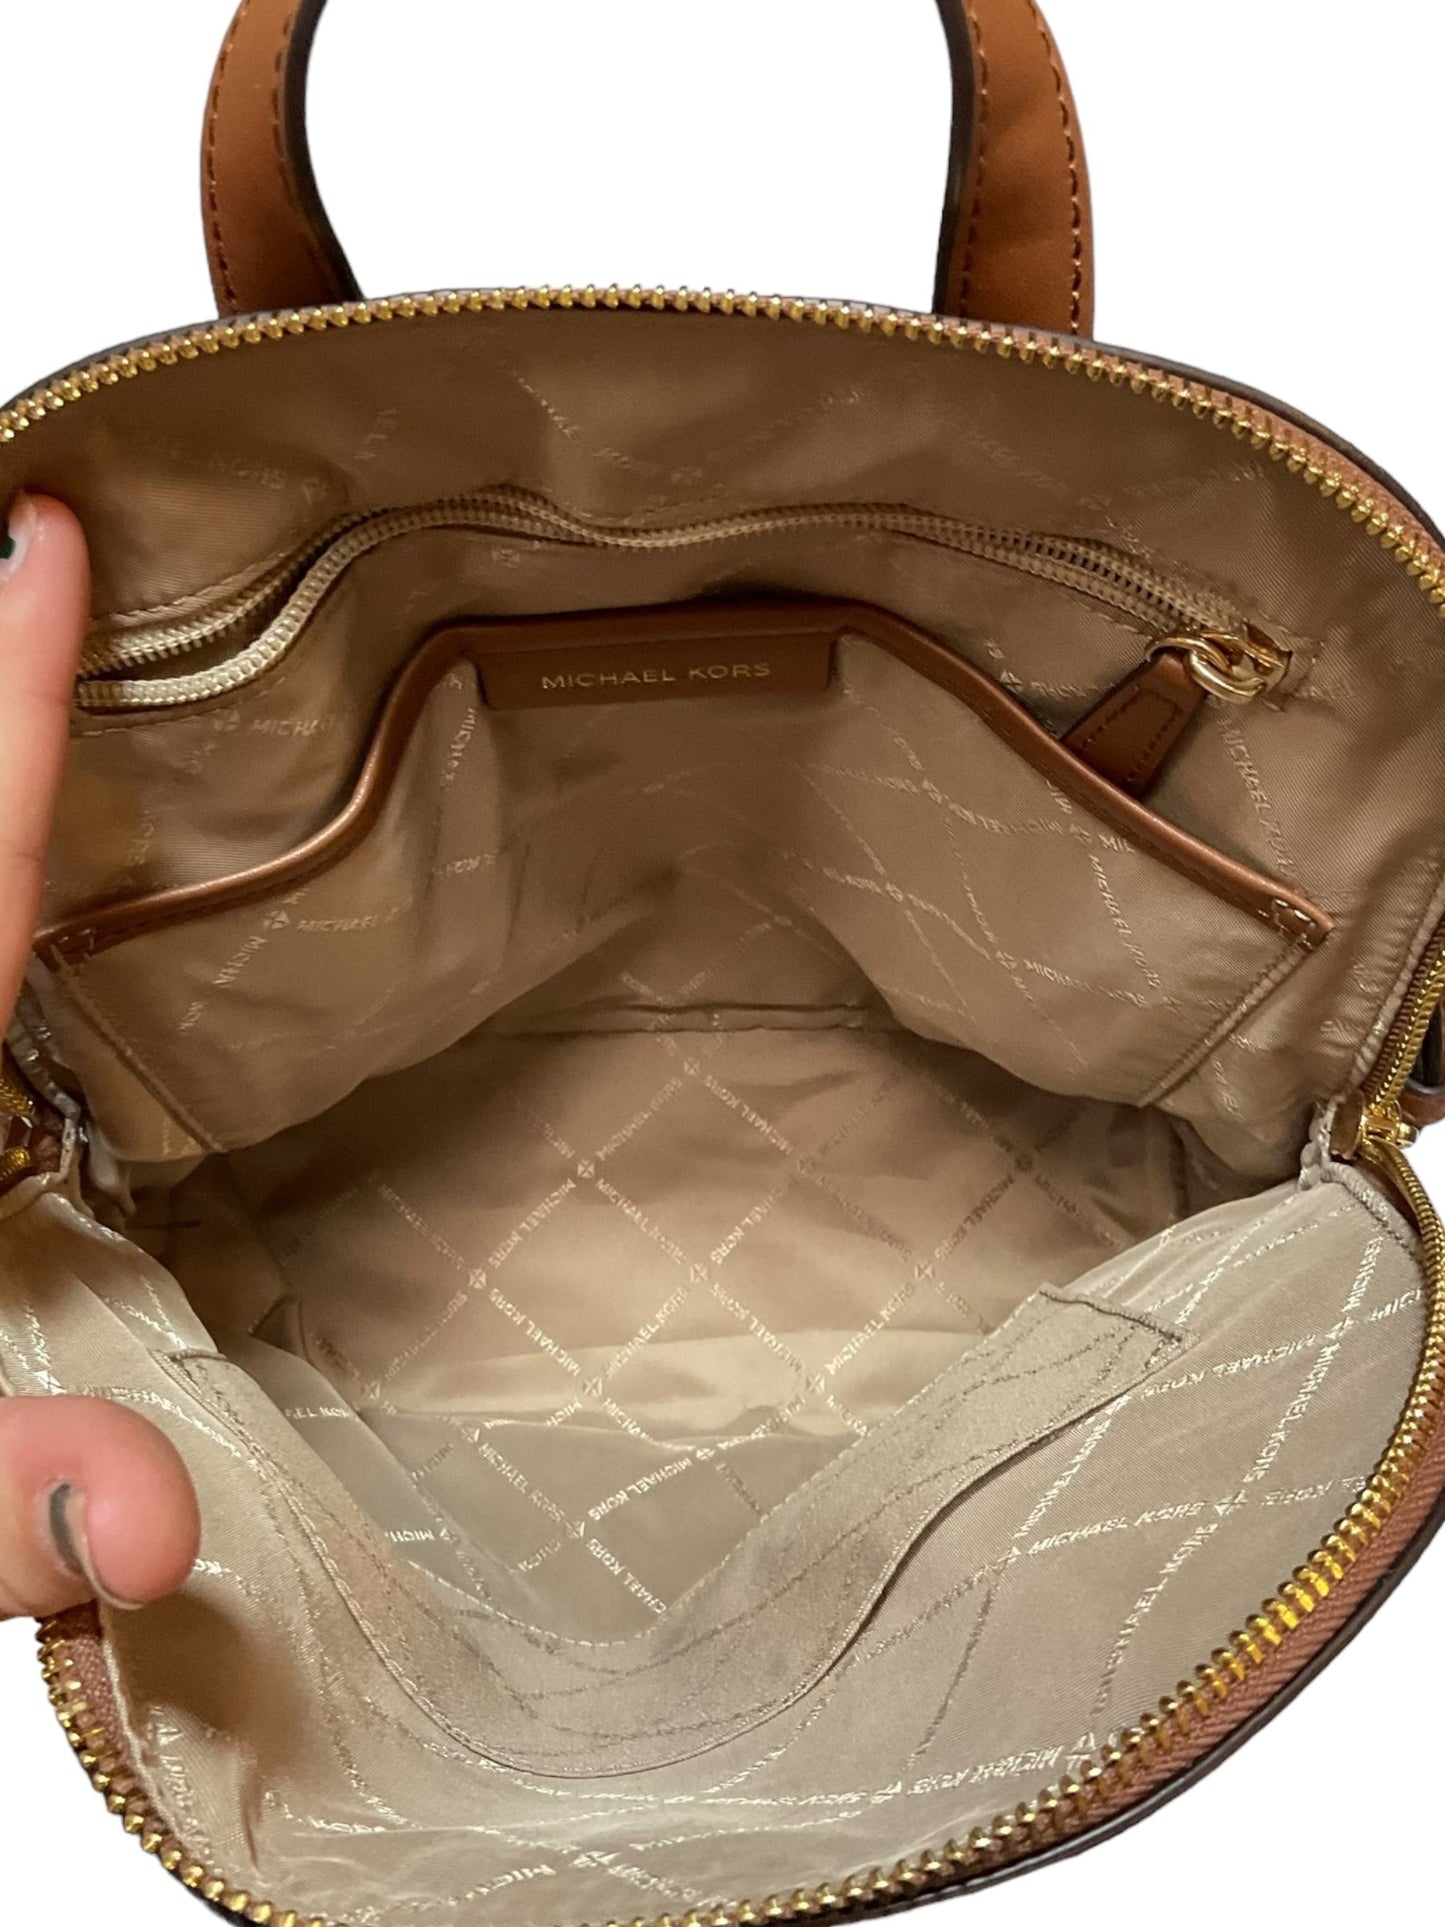 Backpack Designer Michael Kors, Size Medium